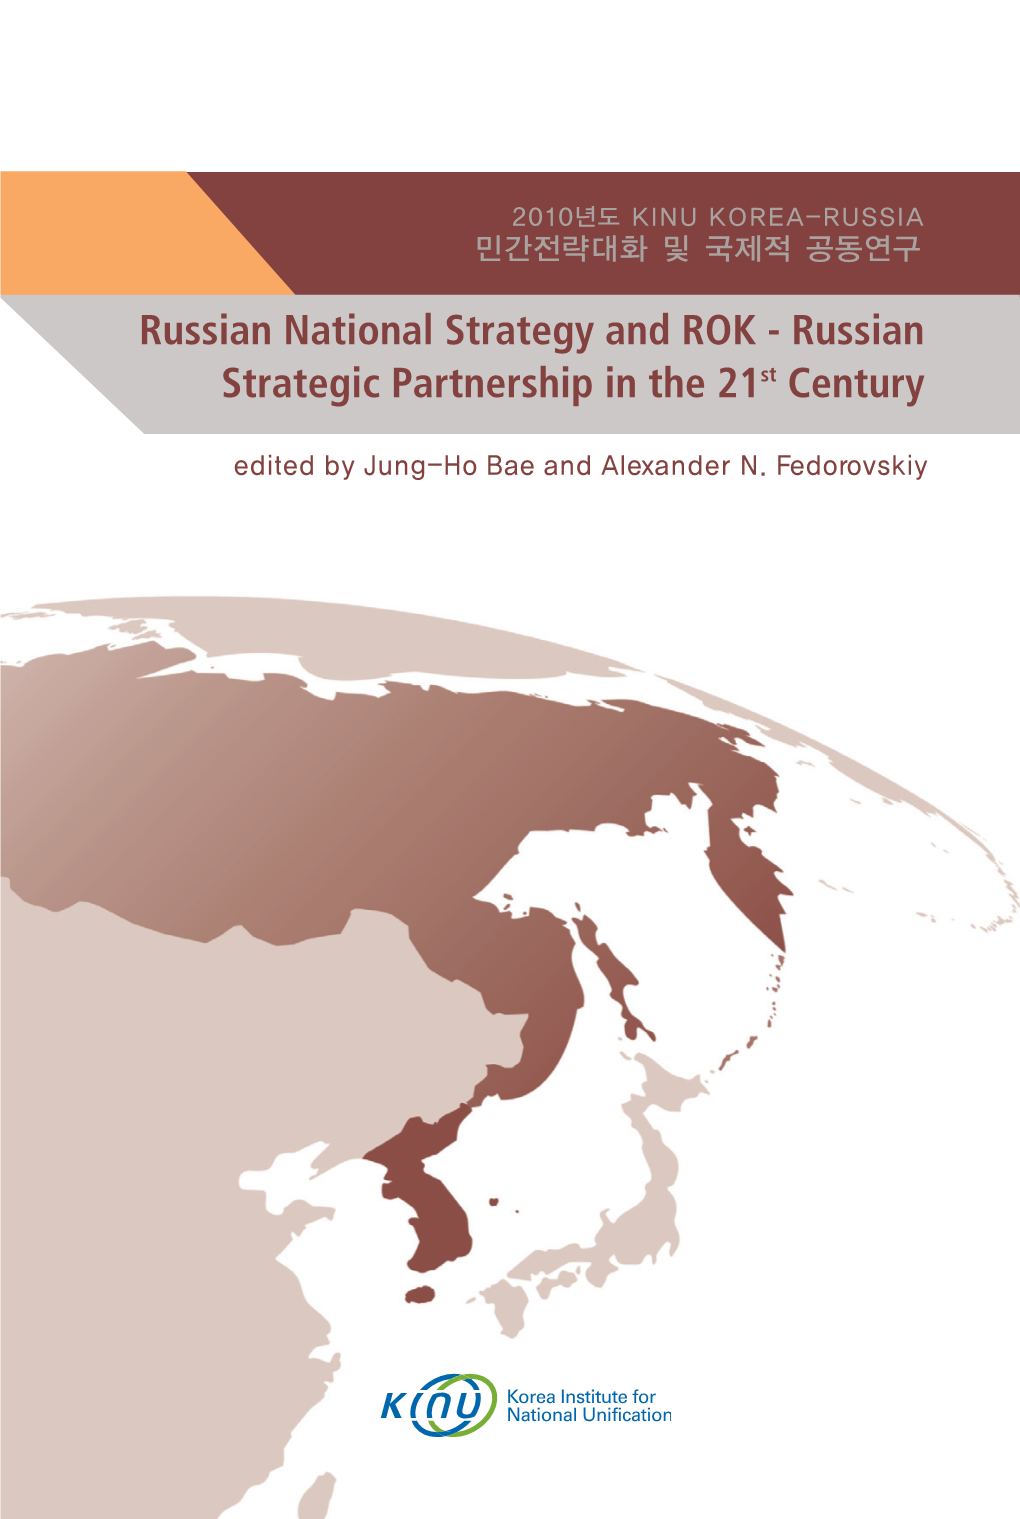 Russian Strategic Partnership in the 21St Century